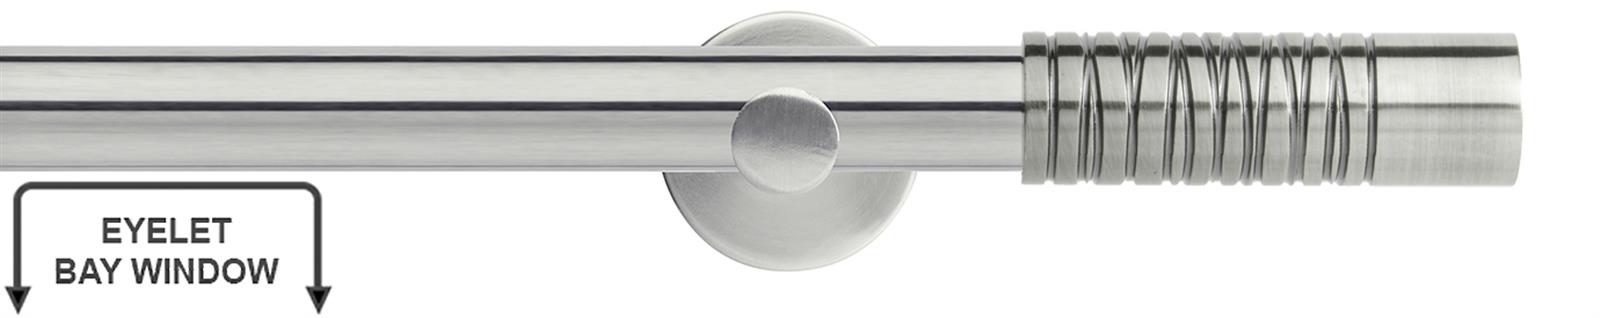 Neo Premium 28mm Eyelet Bay Window Pole Stainless Steel Wired Barrel